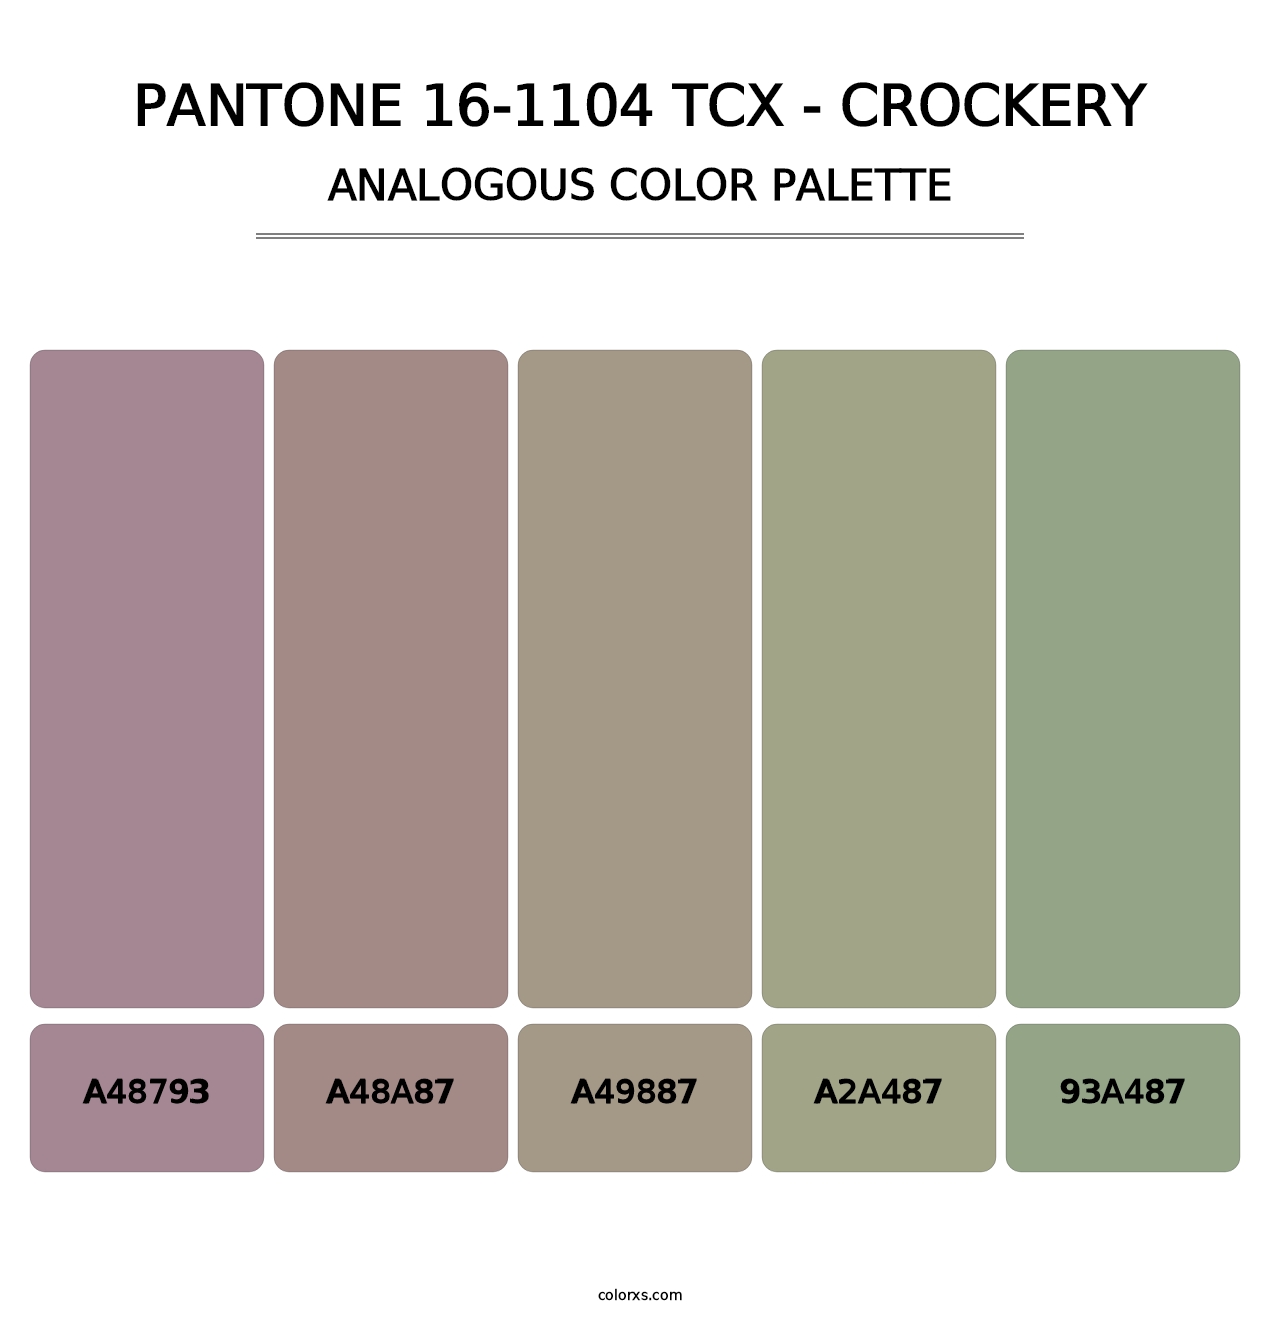 PANTONE 16-1104 TCX - Crockery - Analogous Color Palette